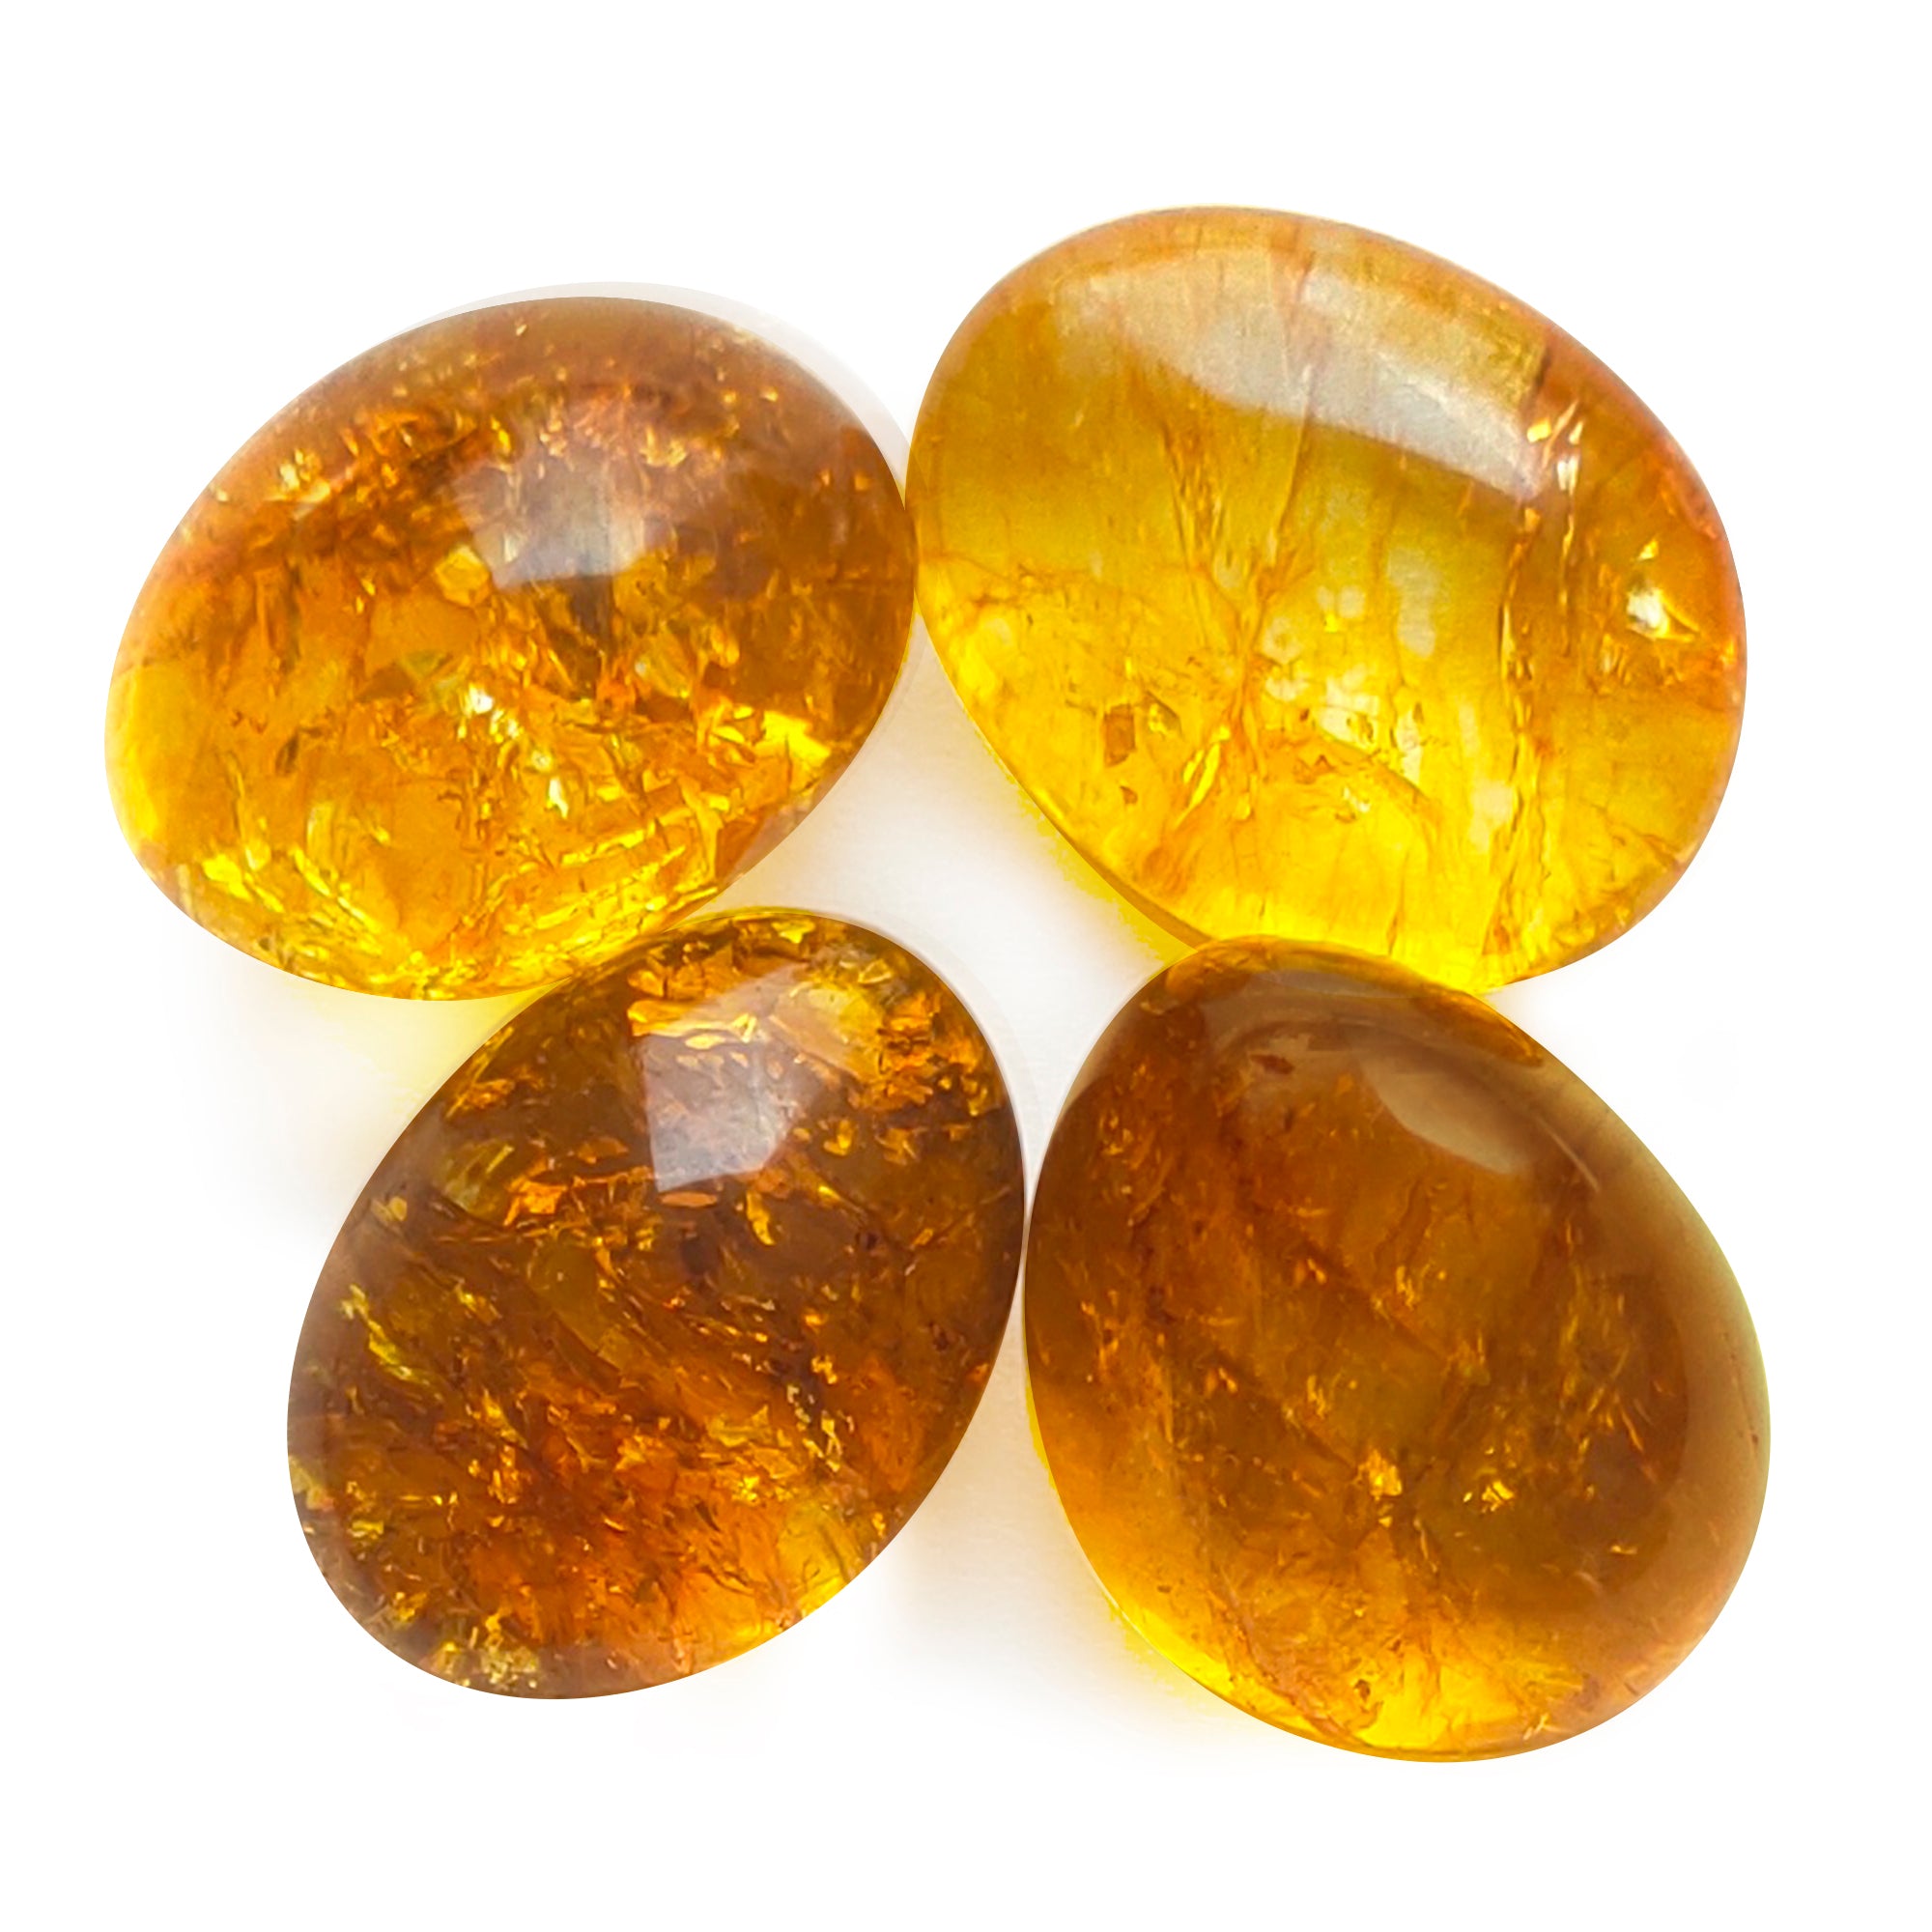 Natural Citrine Stone Chip Bracelet Gold Yellow Crystal Quartz